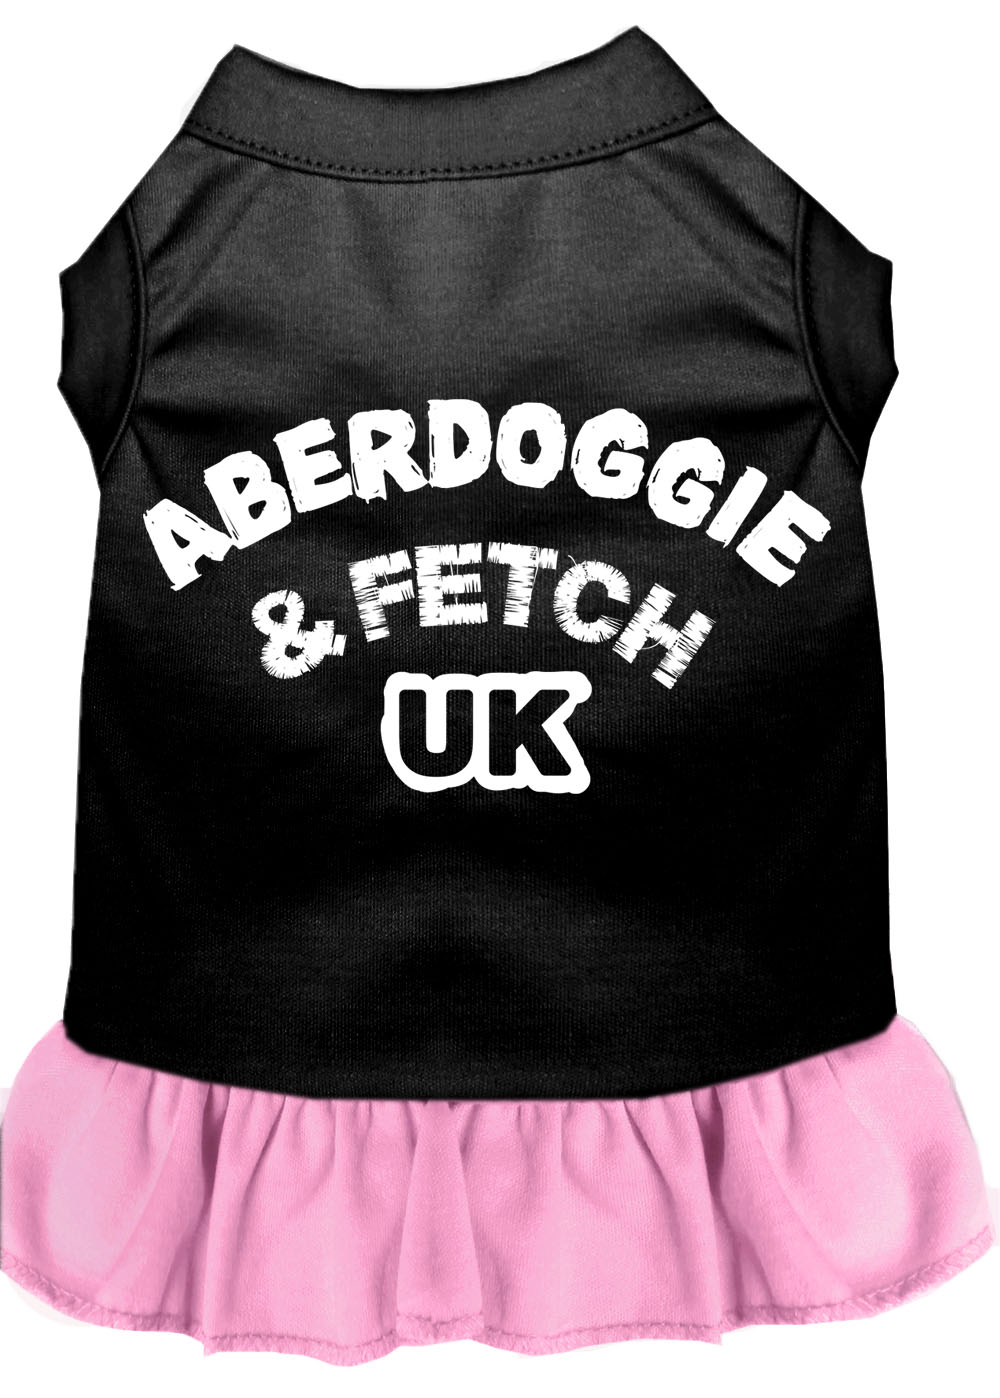 Aberdoggie Uk Screen Print Dog Dress Black With Light Pink Lg GreatEagleInc